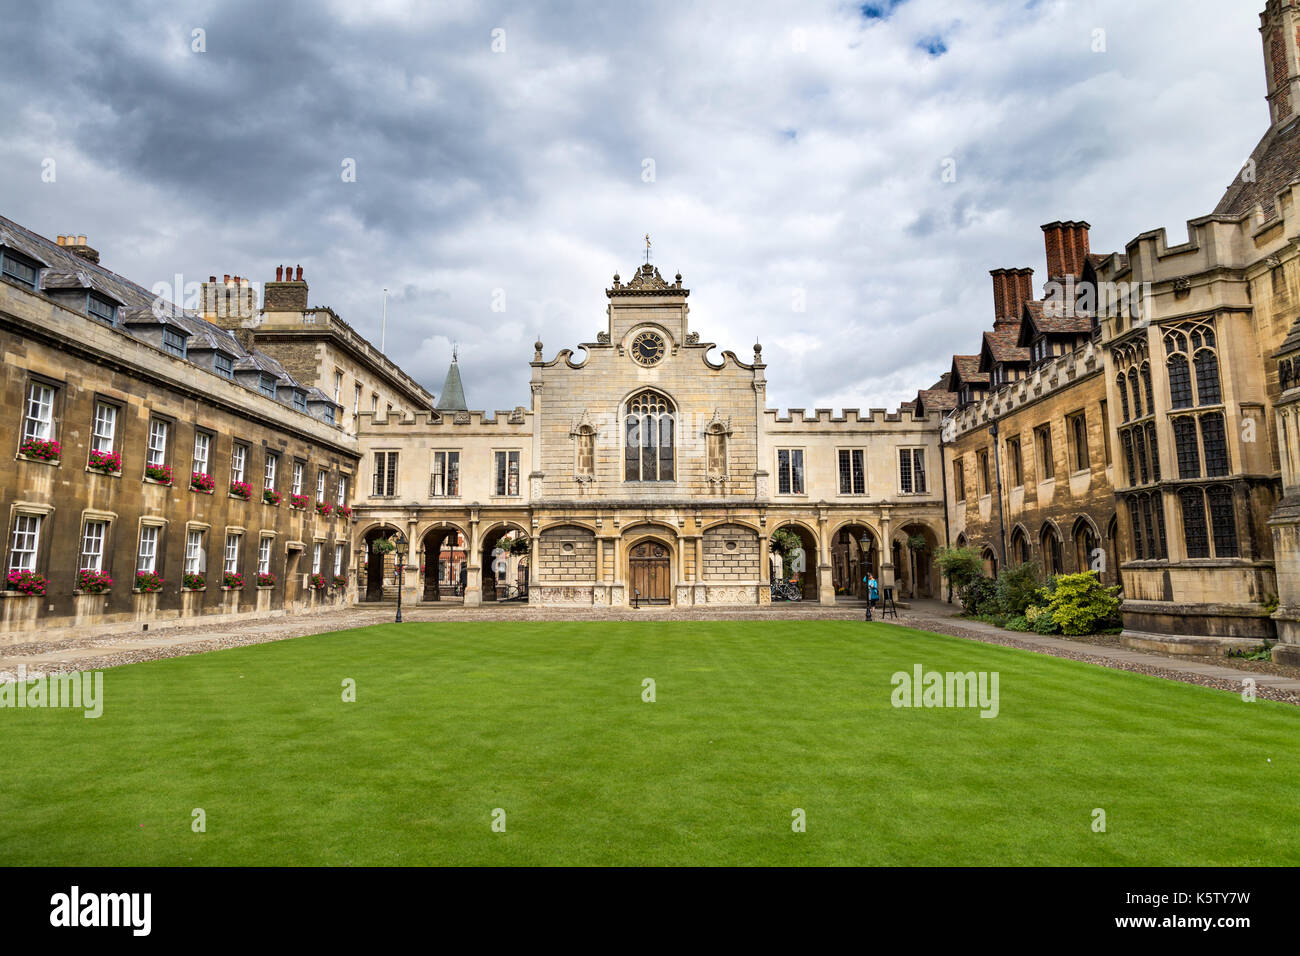 Das alte Gericht Peterhouse College, Cambridge, Großbritannien Stockfoto